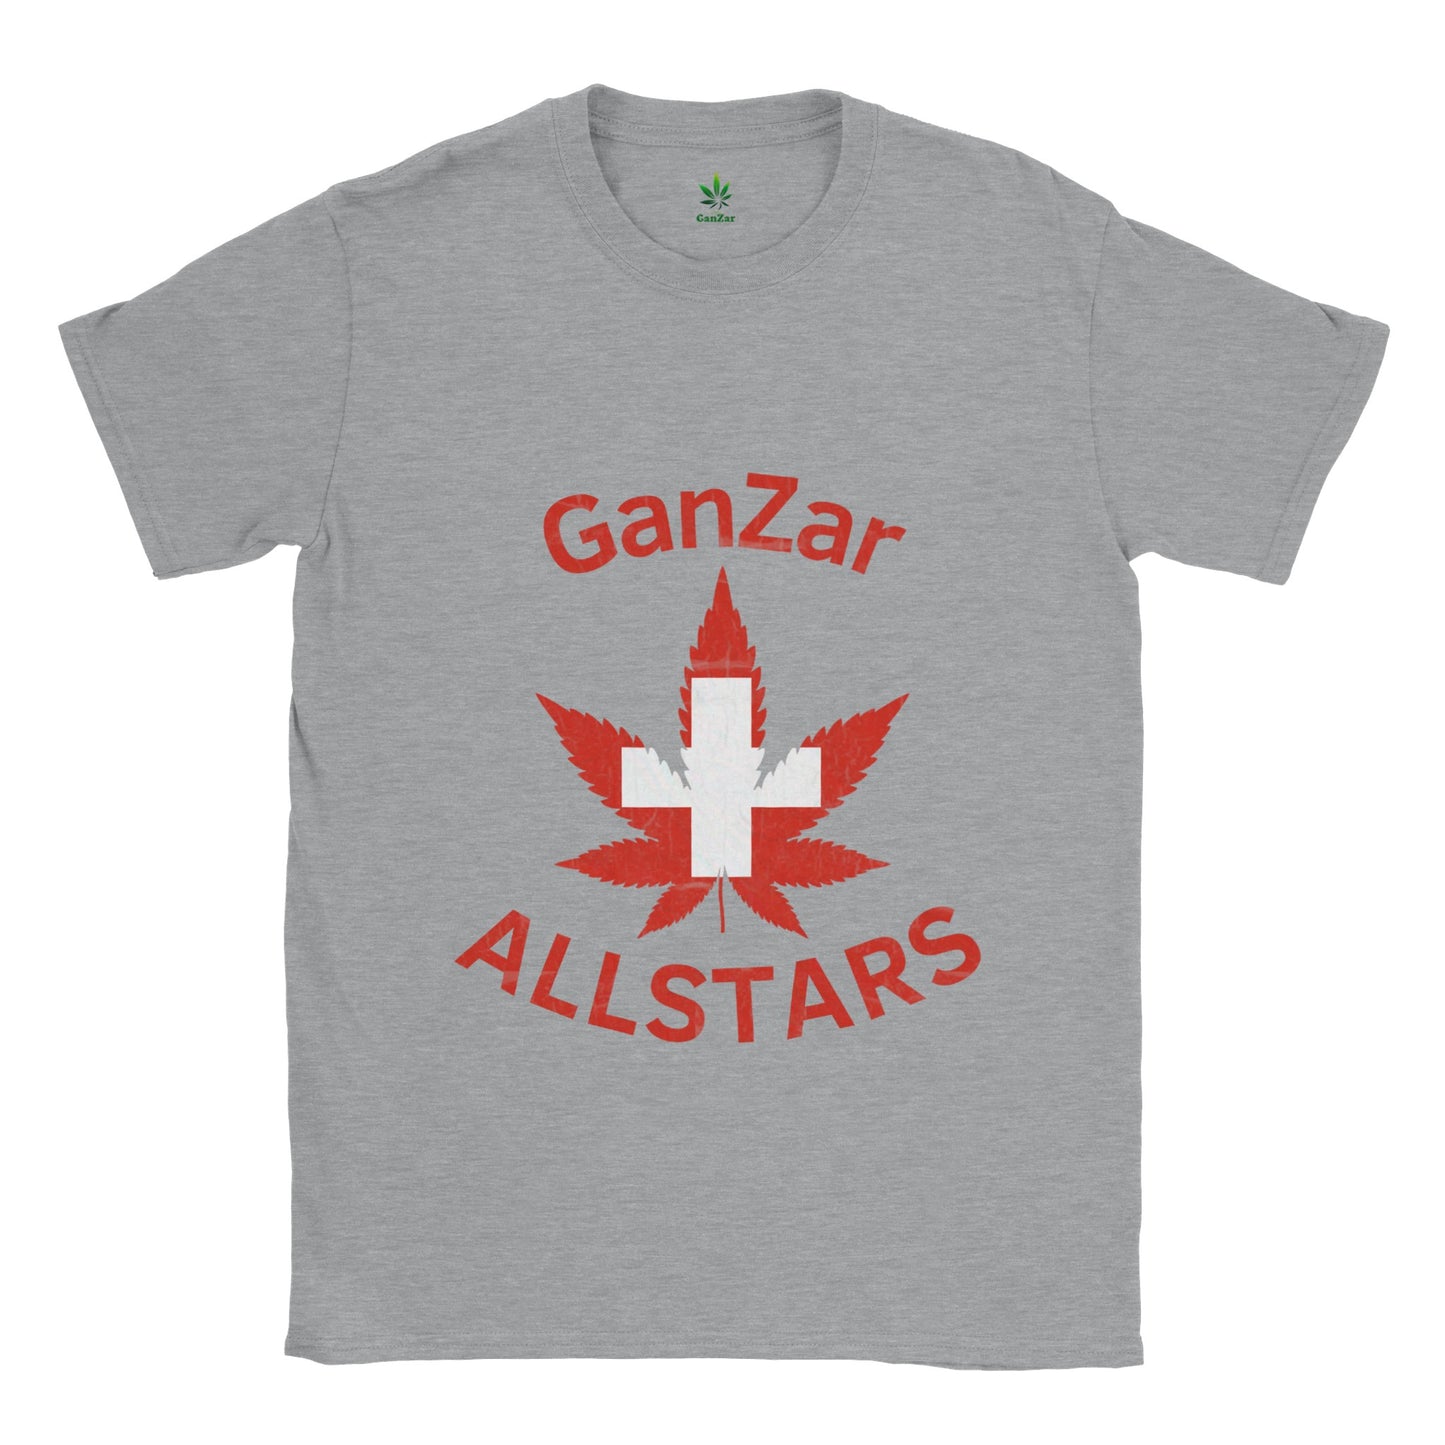 Schweiz GanZar Allstars Unisex T-Shirt